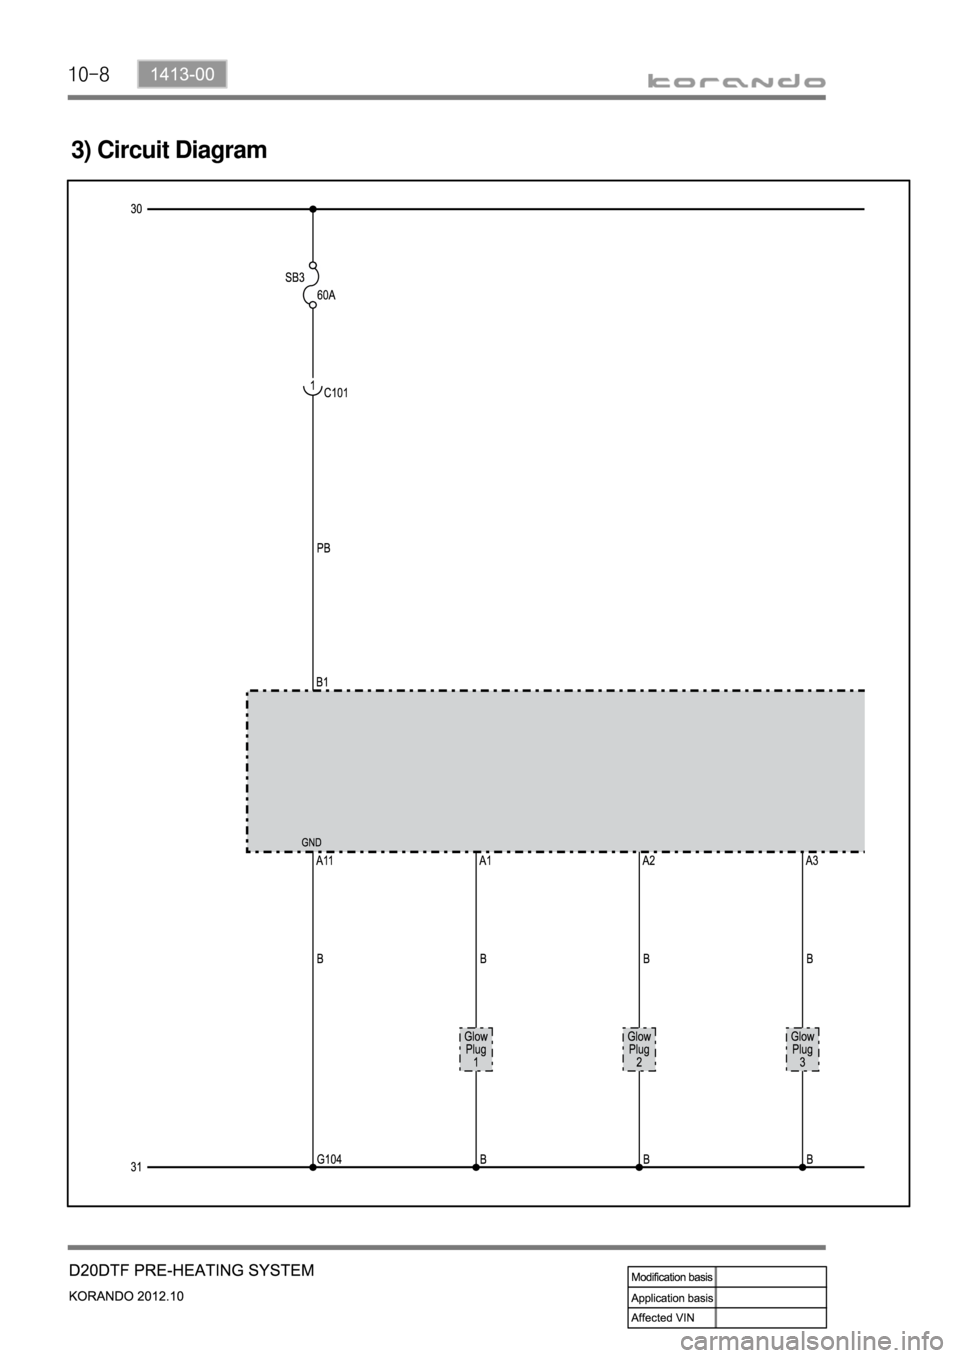 SSANGYONG KORANDO 2012  Service Manual 10-8
3) Circuit Diagram 